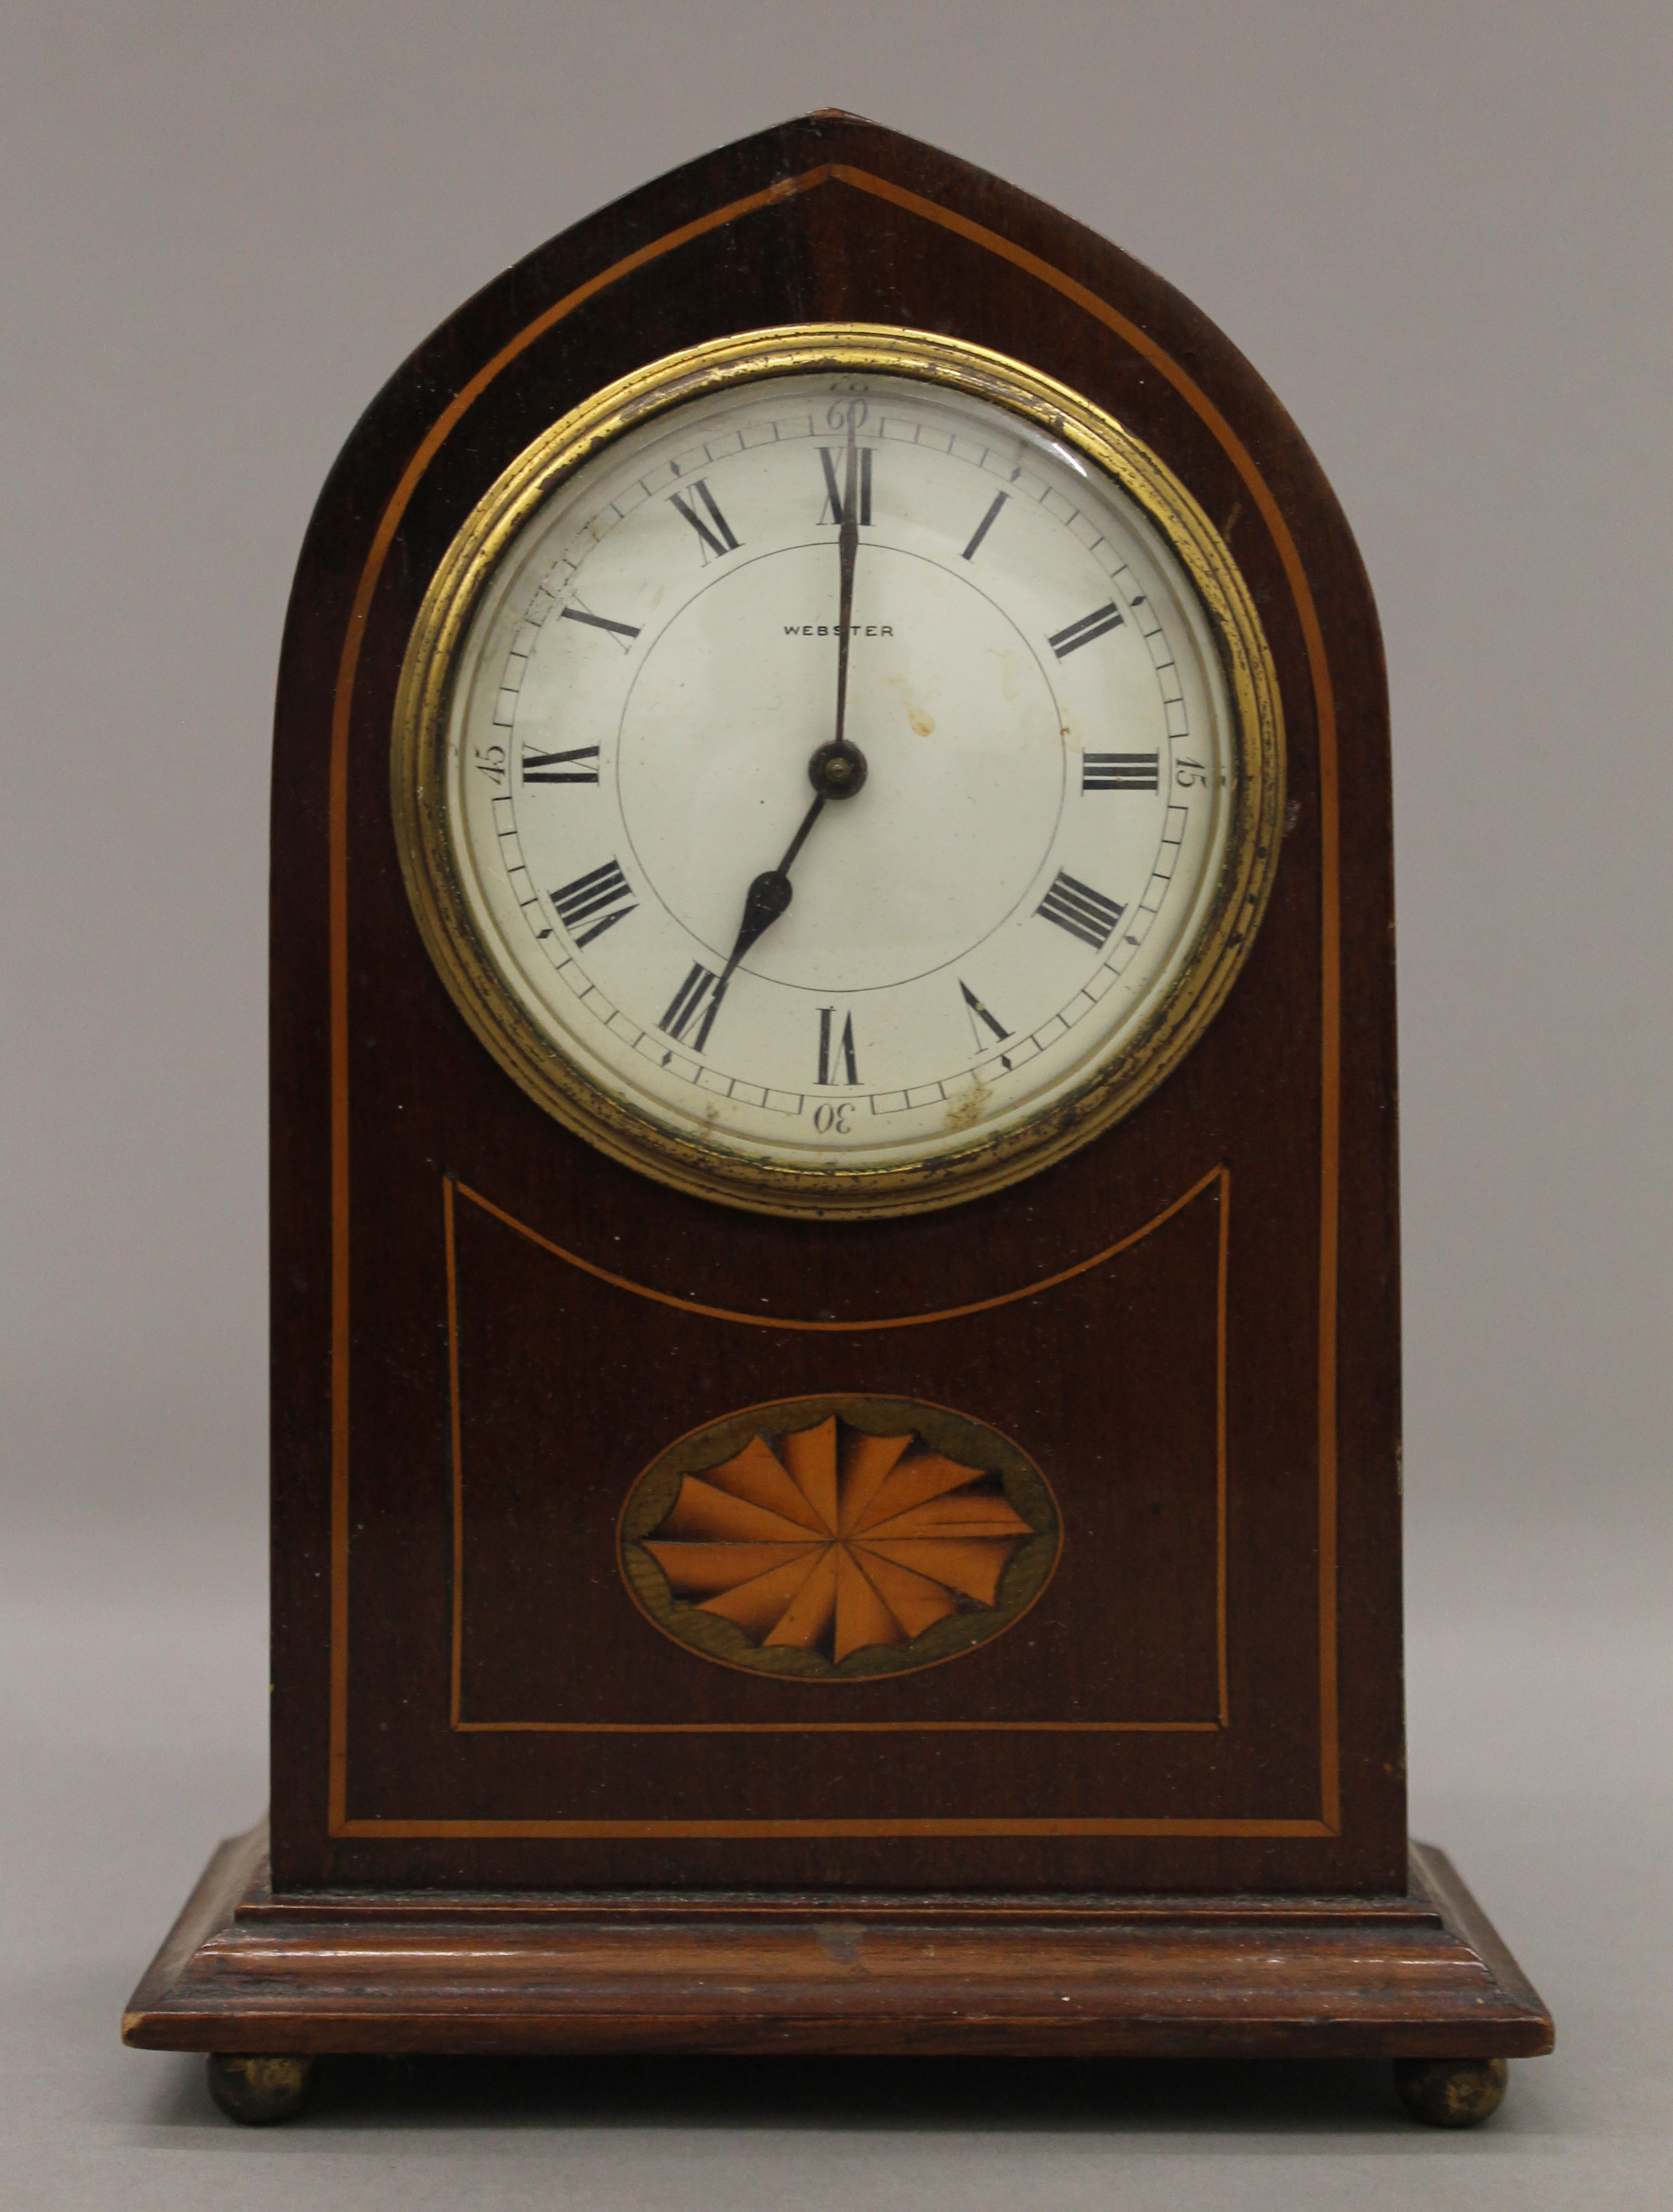 An Edwardian inlaid mahogany mantle clock. 22 cm high.